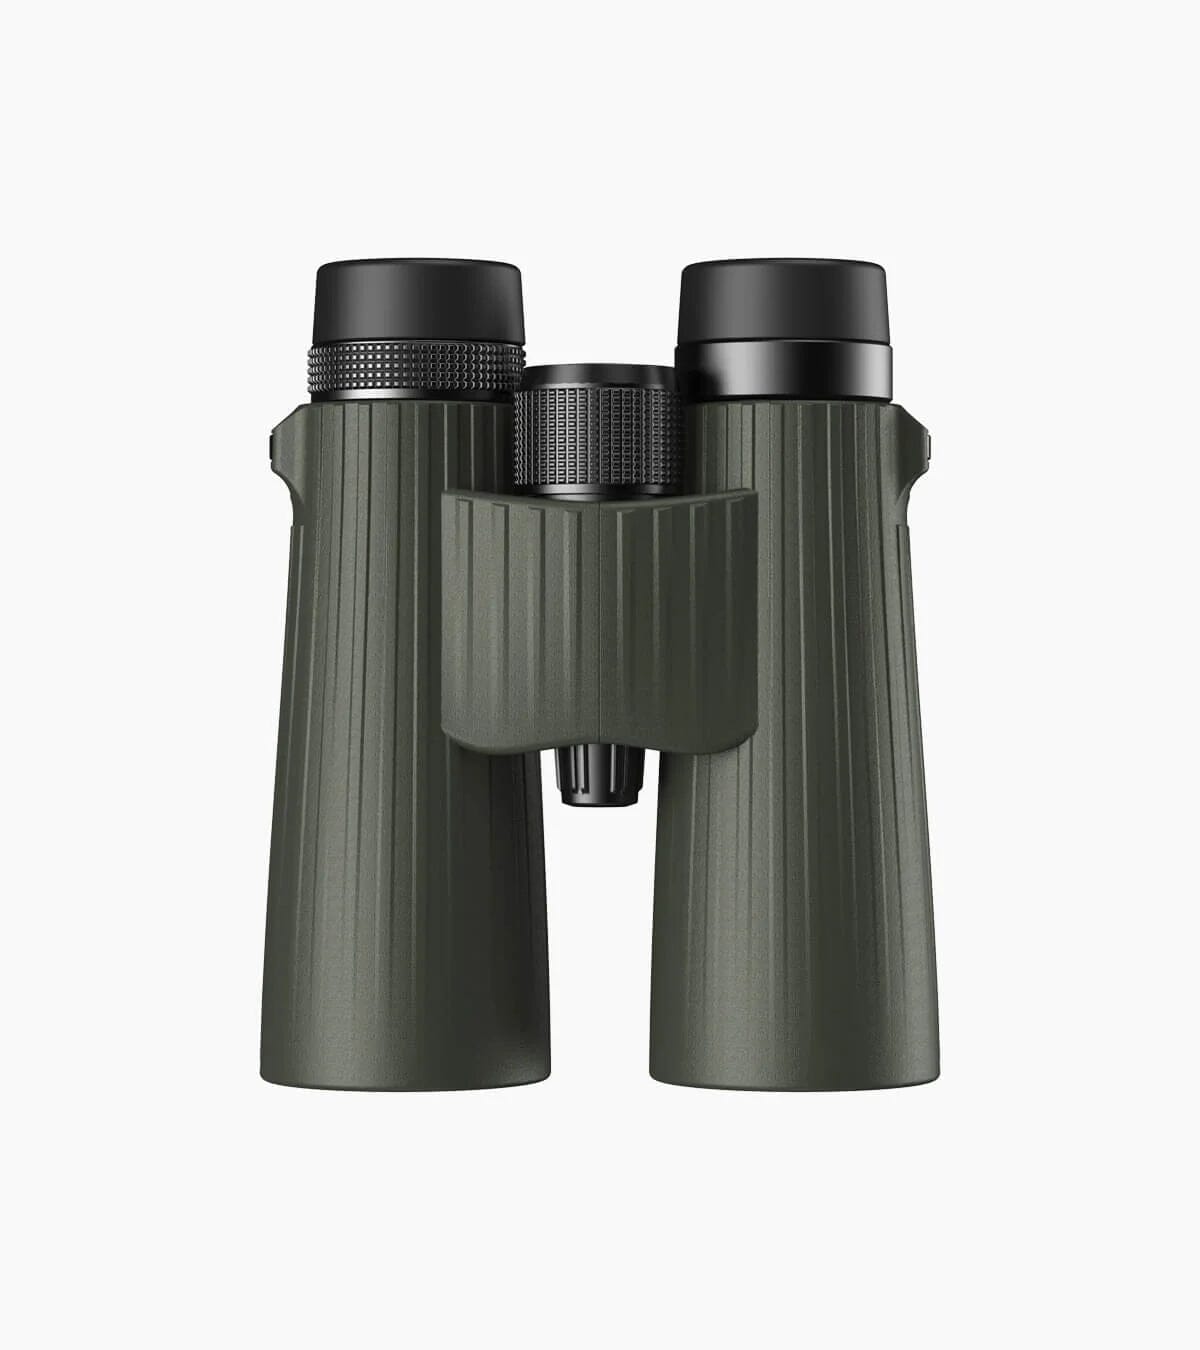 BR001 High-Powered 12X50 Birdwatching Binoculars With Smartphone Adapter APEXEL 